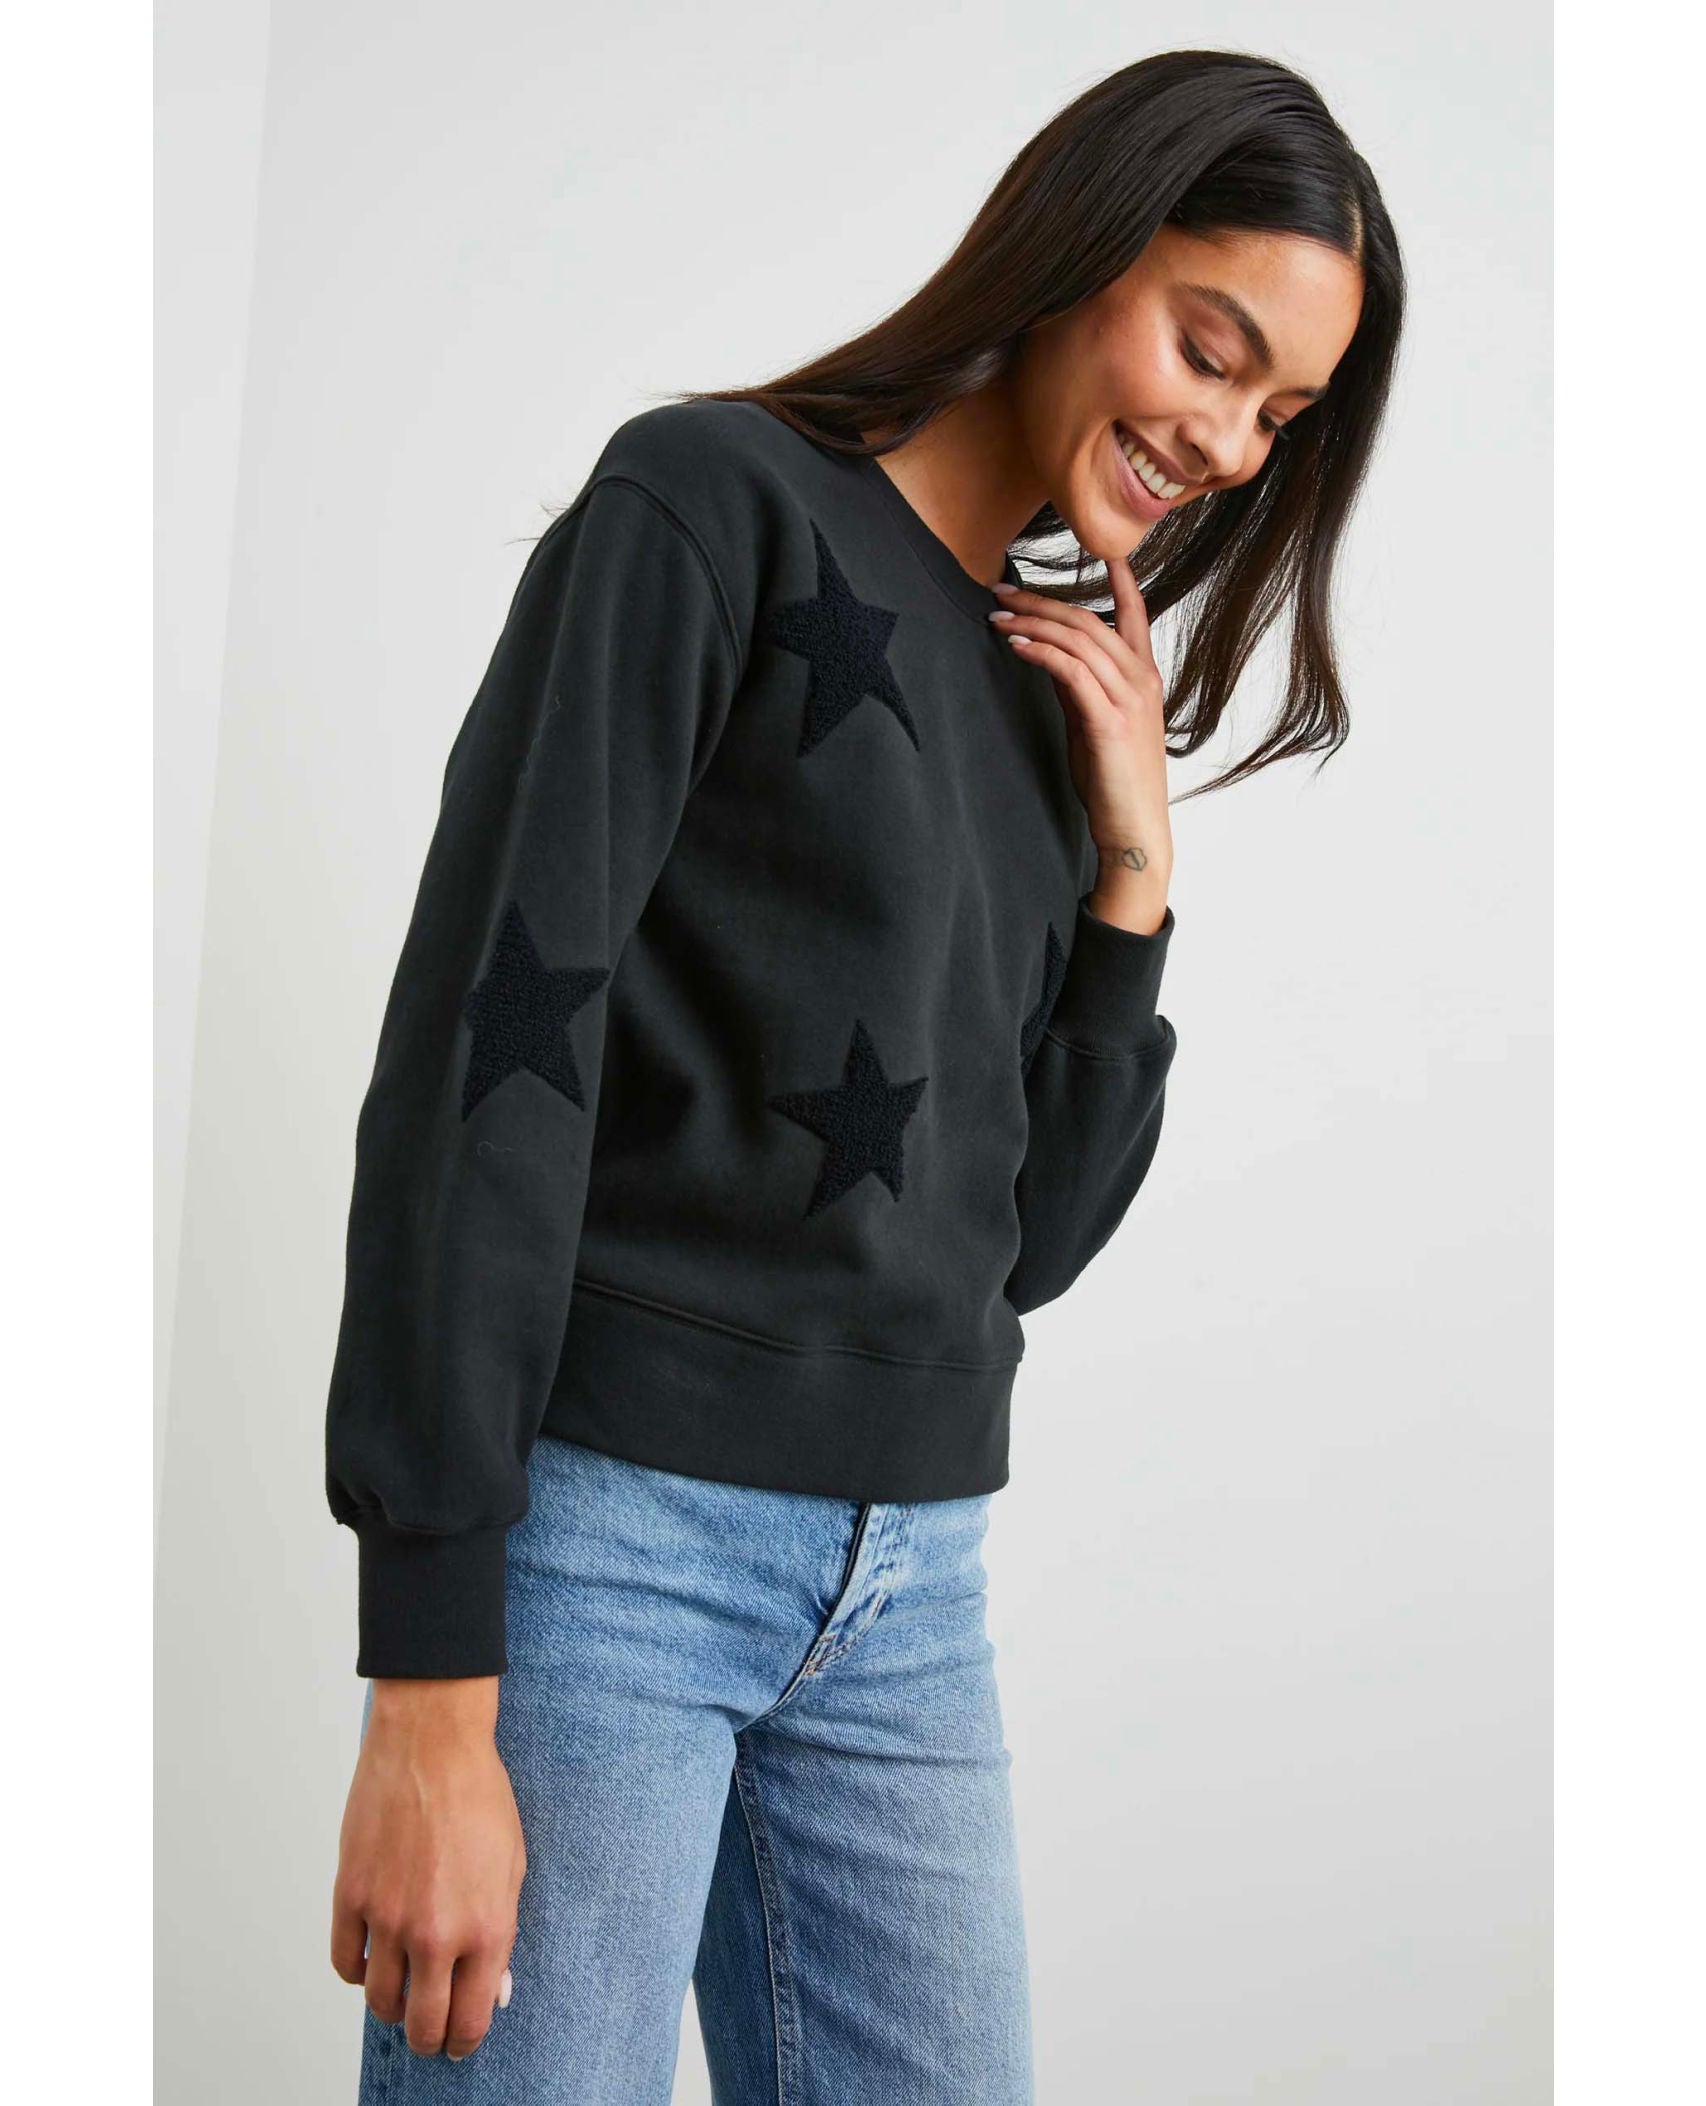 Sonia Black Sweatshirt With Stars